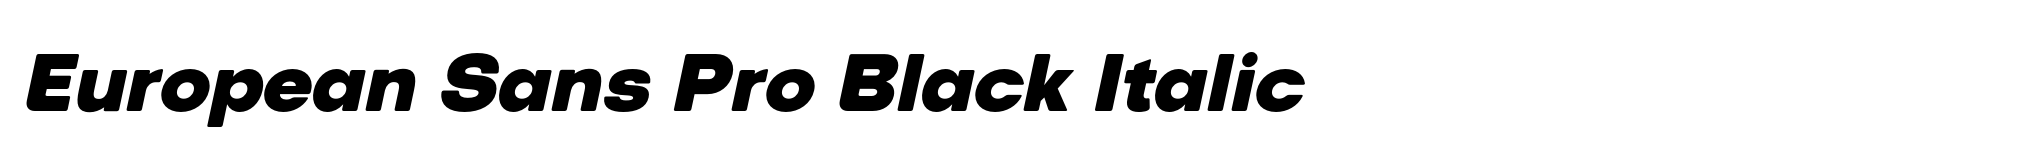 European Sans Pro Black Italic image